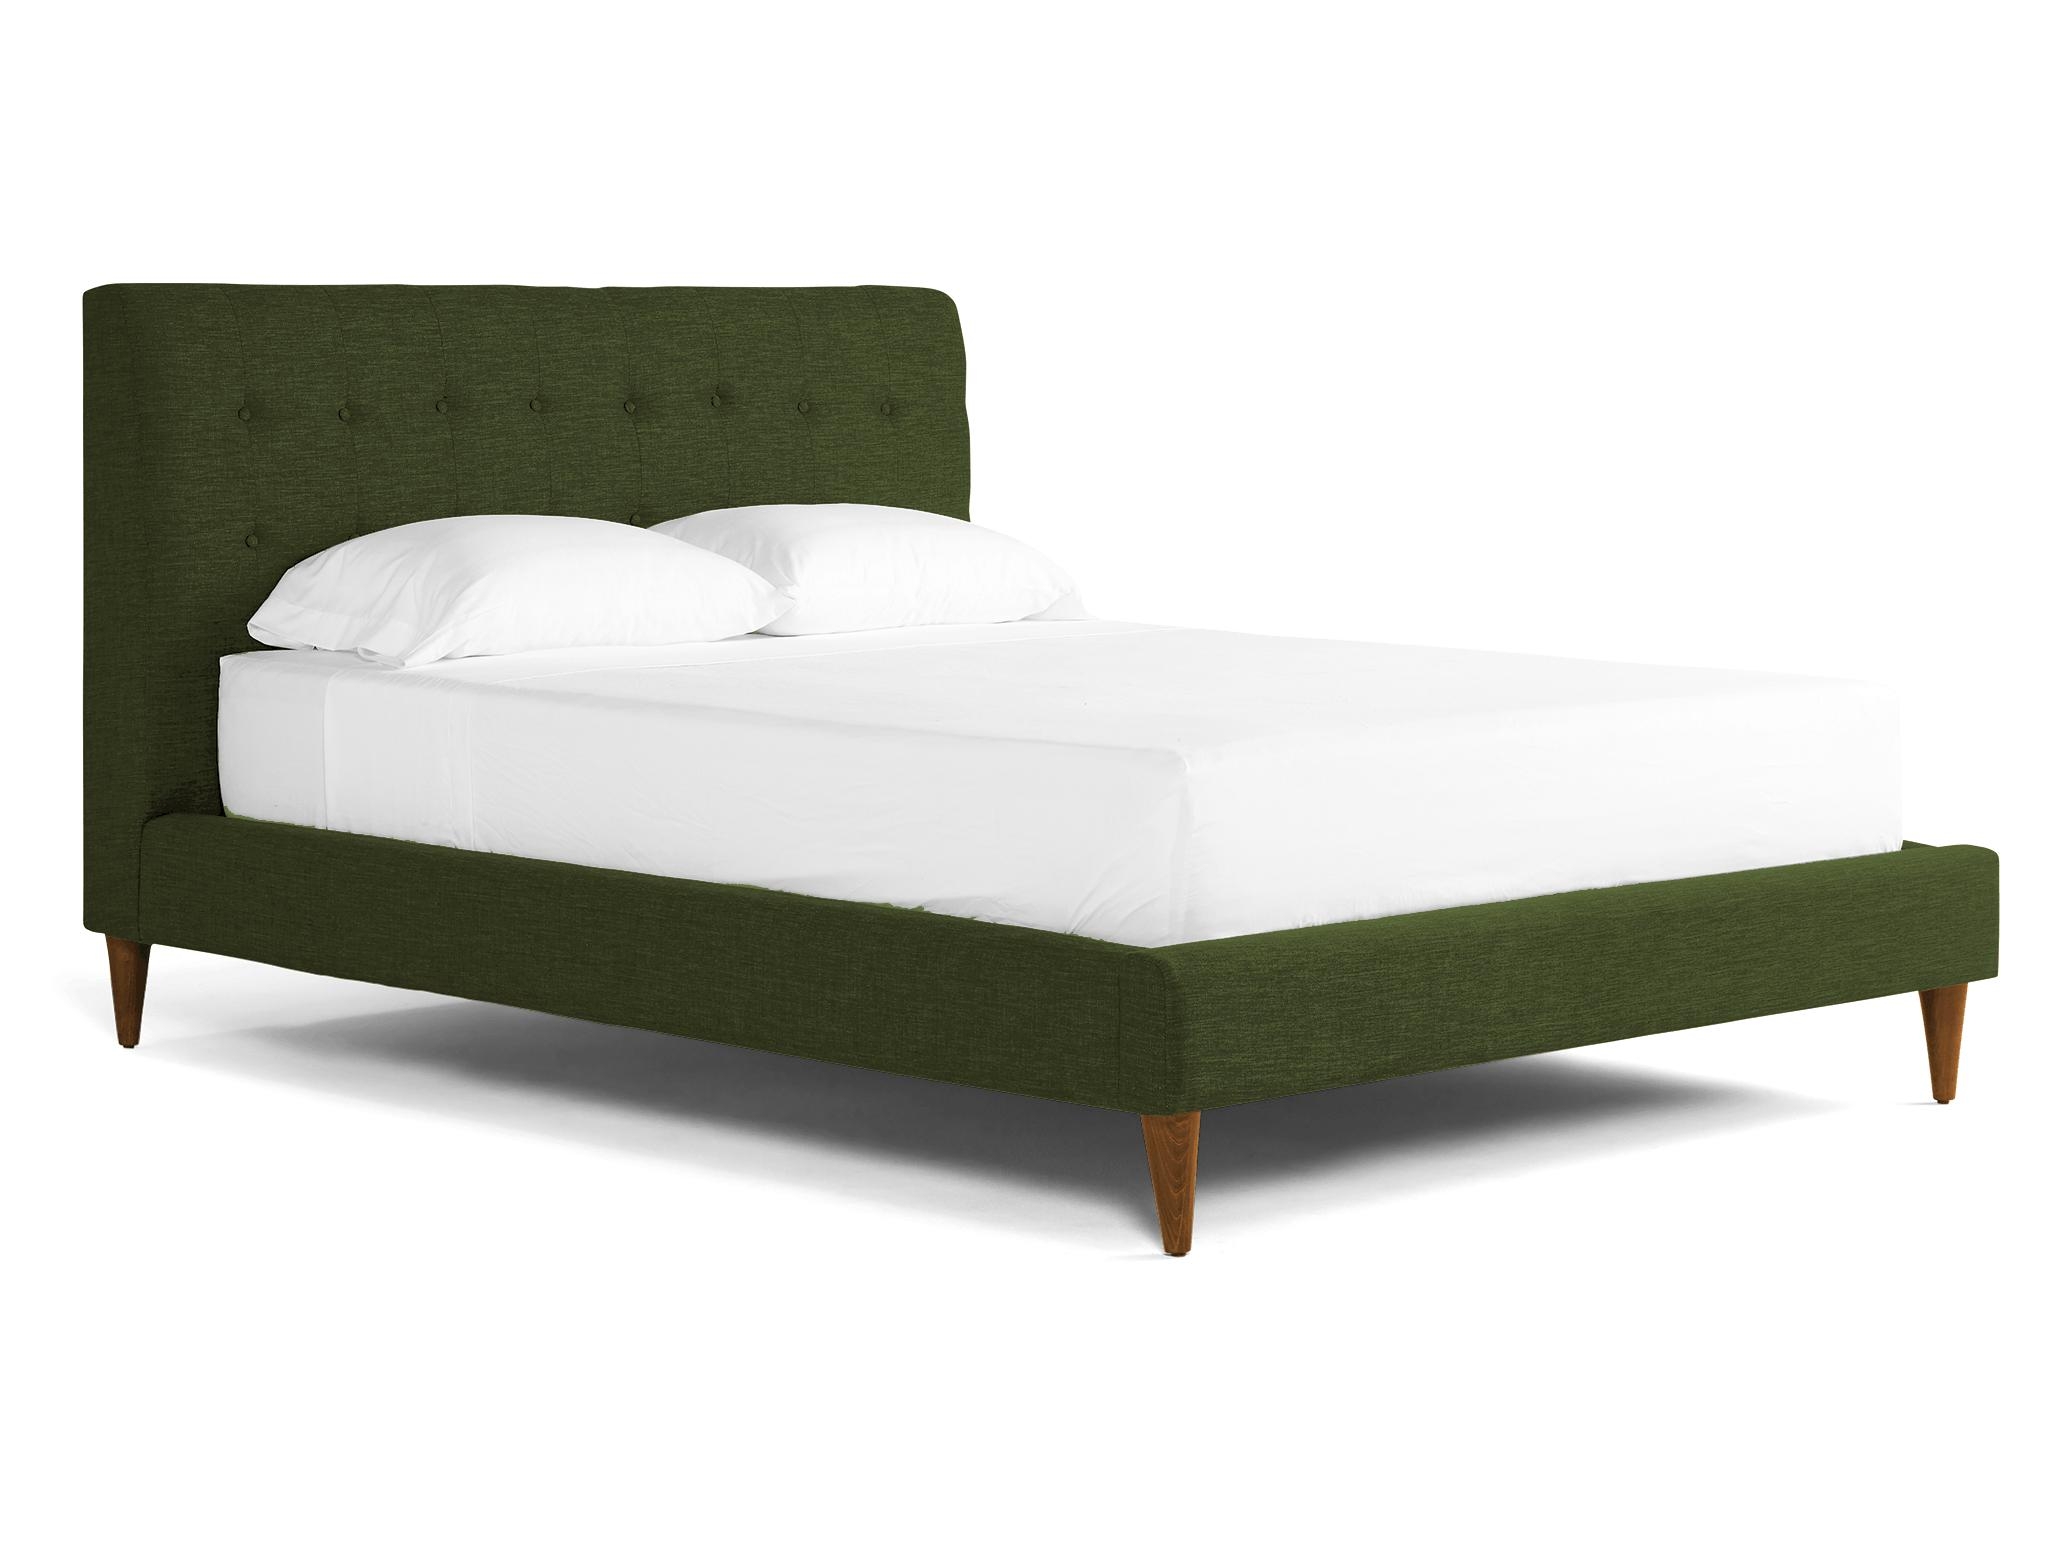 Green Eliot Mid Century Modern Bed - Royale Forest - Mocha - Eastern King - Image 1